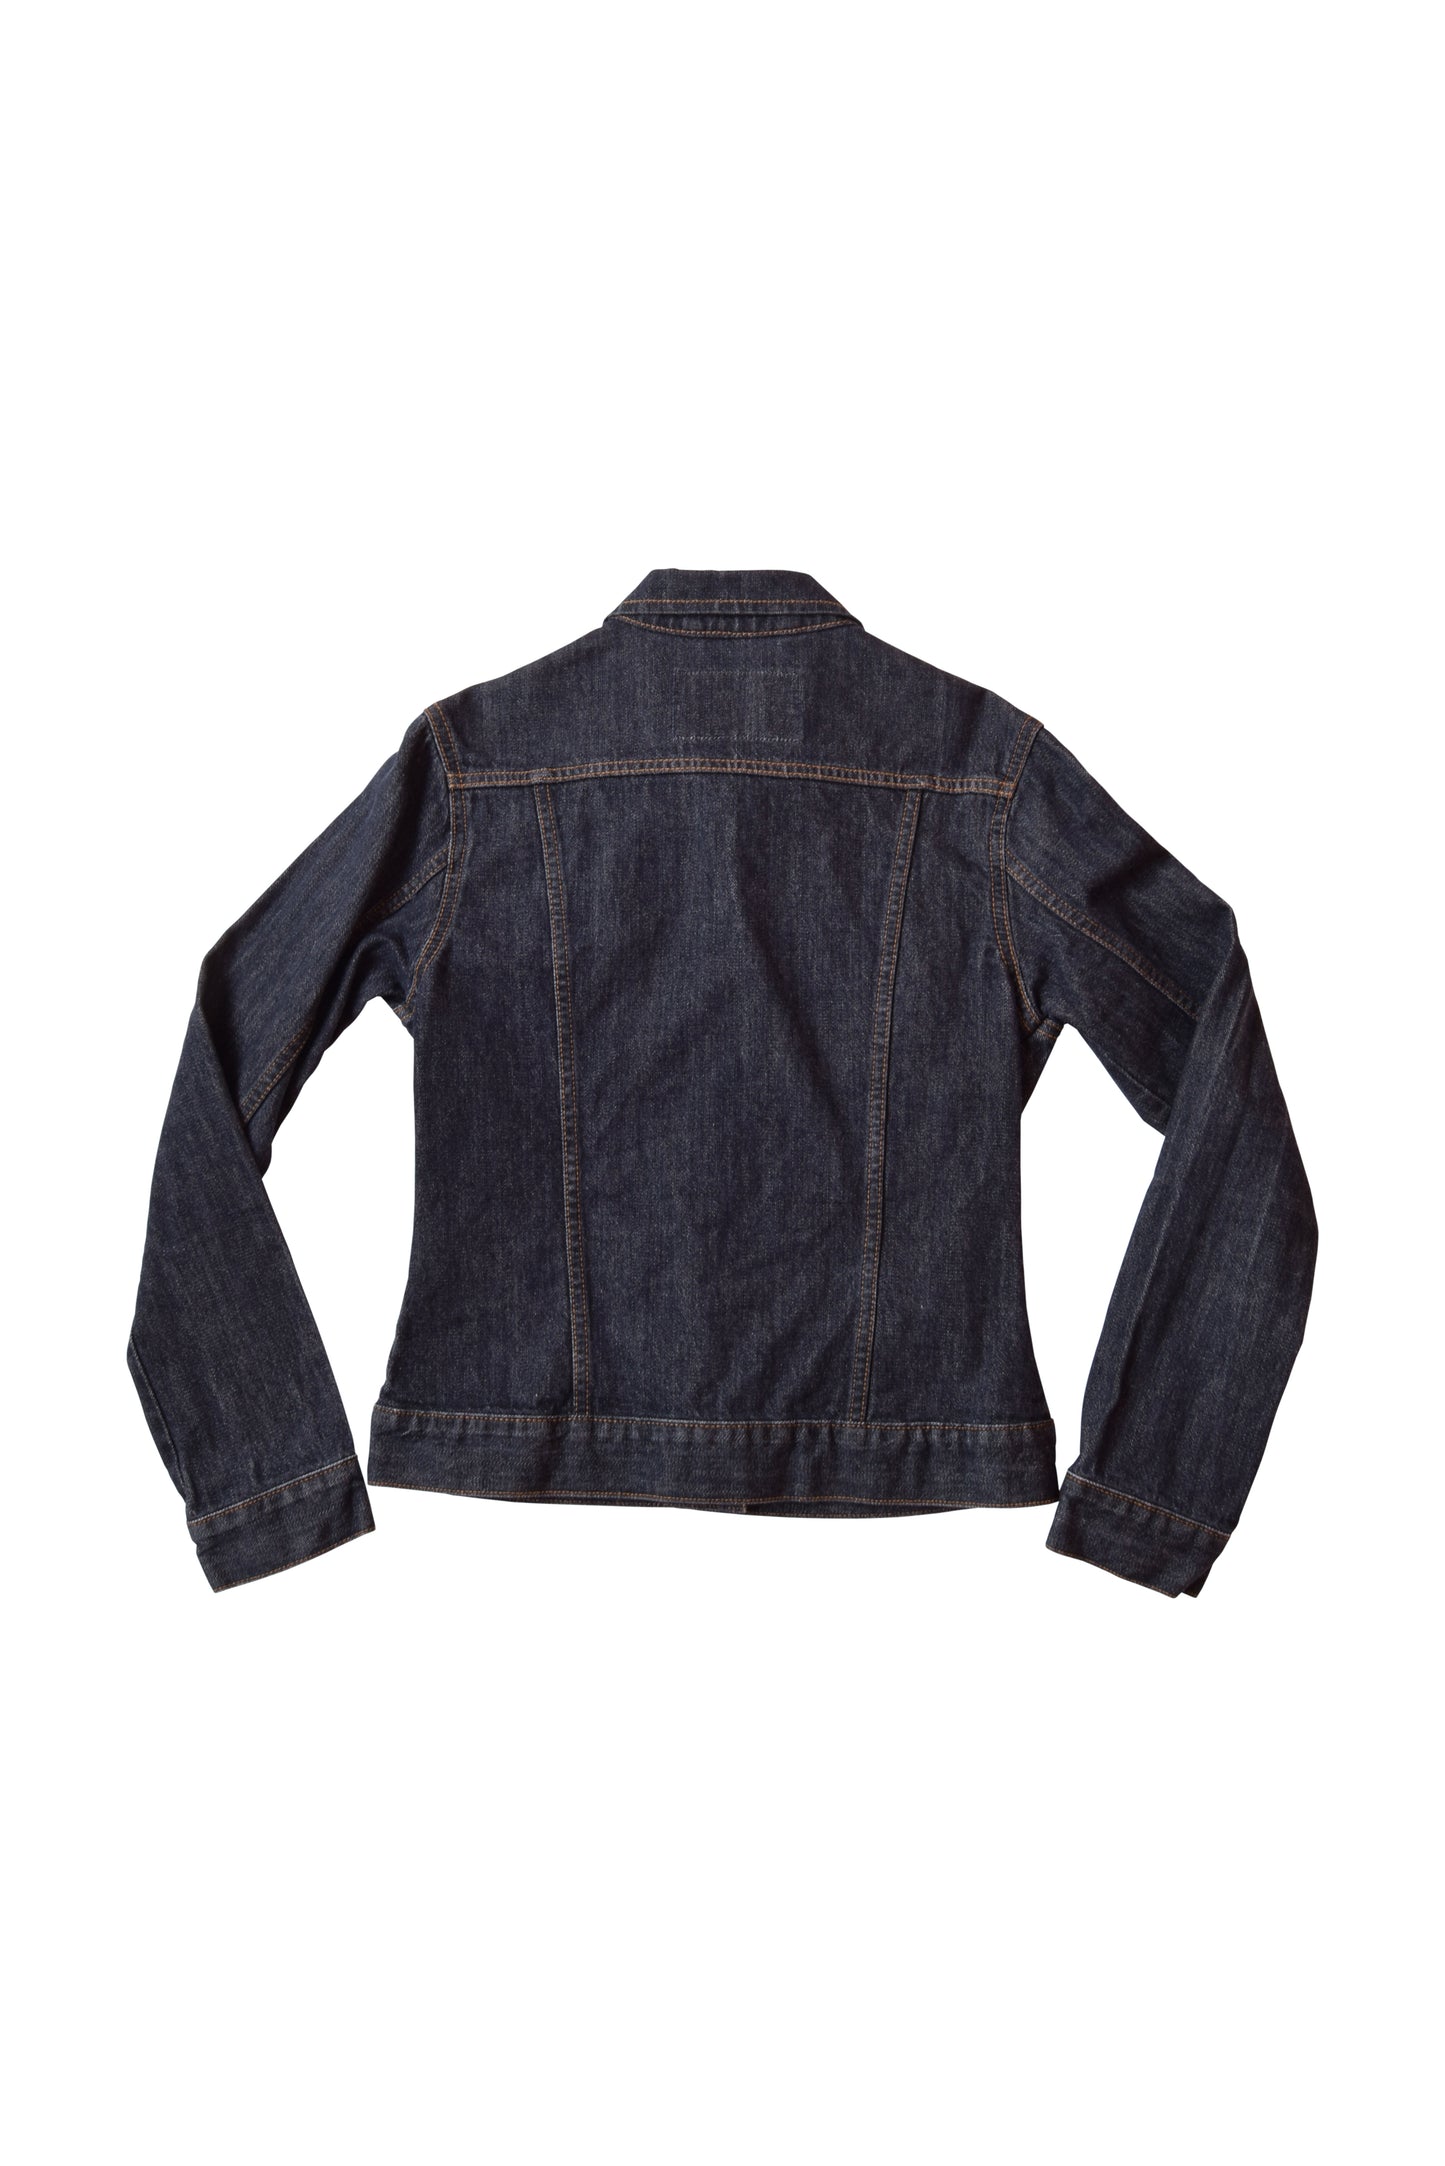 Vintage Wrangler Denim Jacket Authentic Western Size M